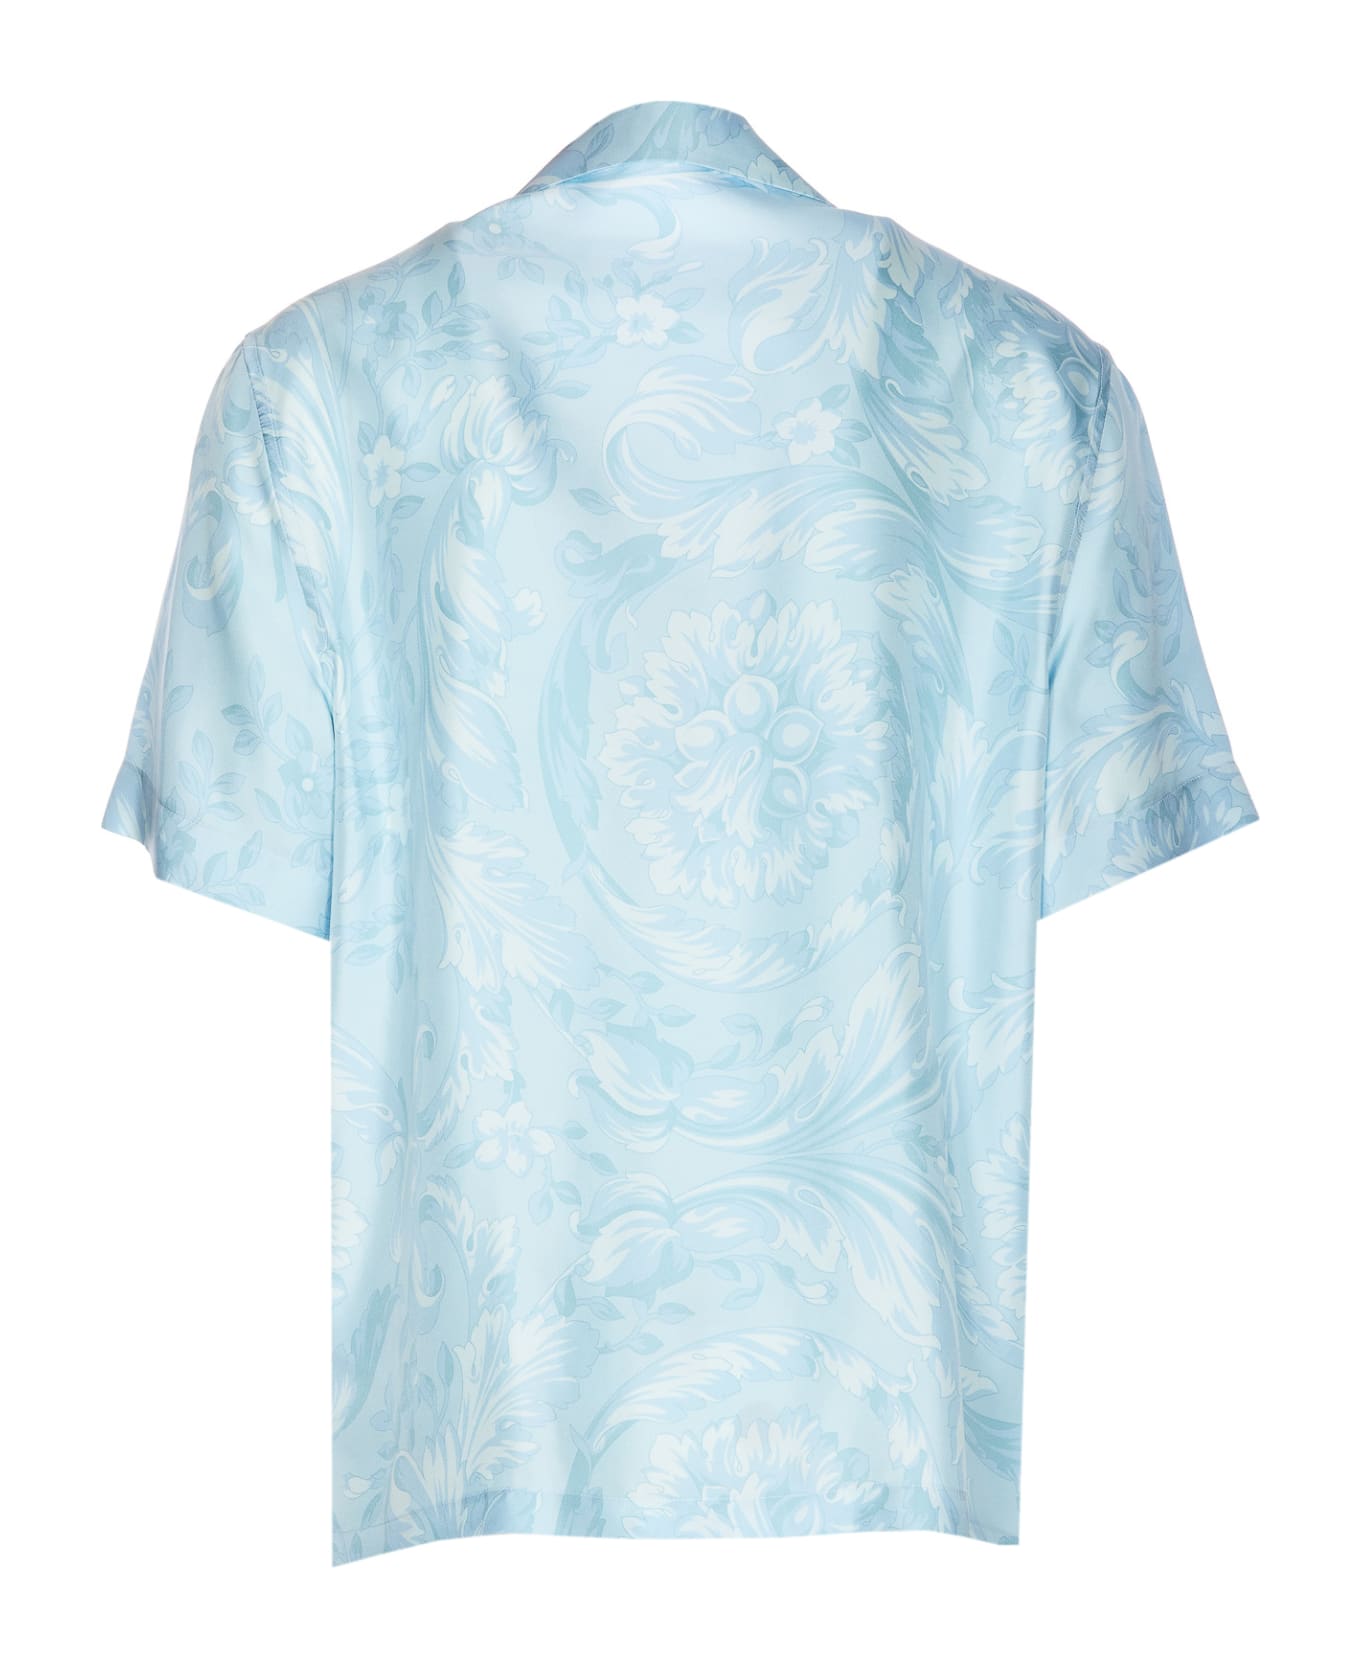 Versace Barocco Shirt - Pale blue シャツ